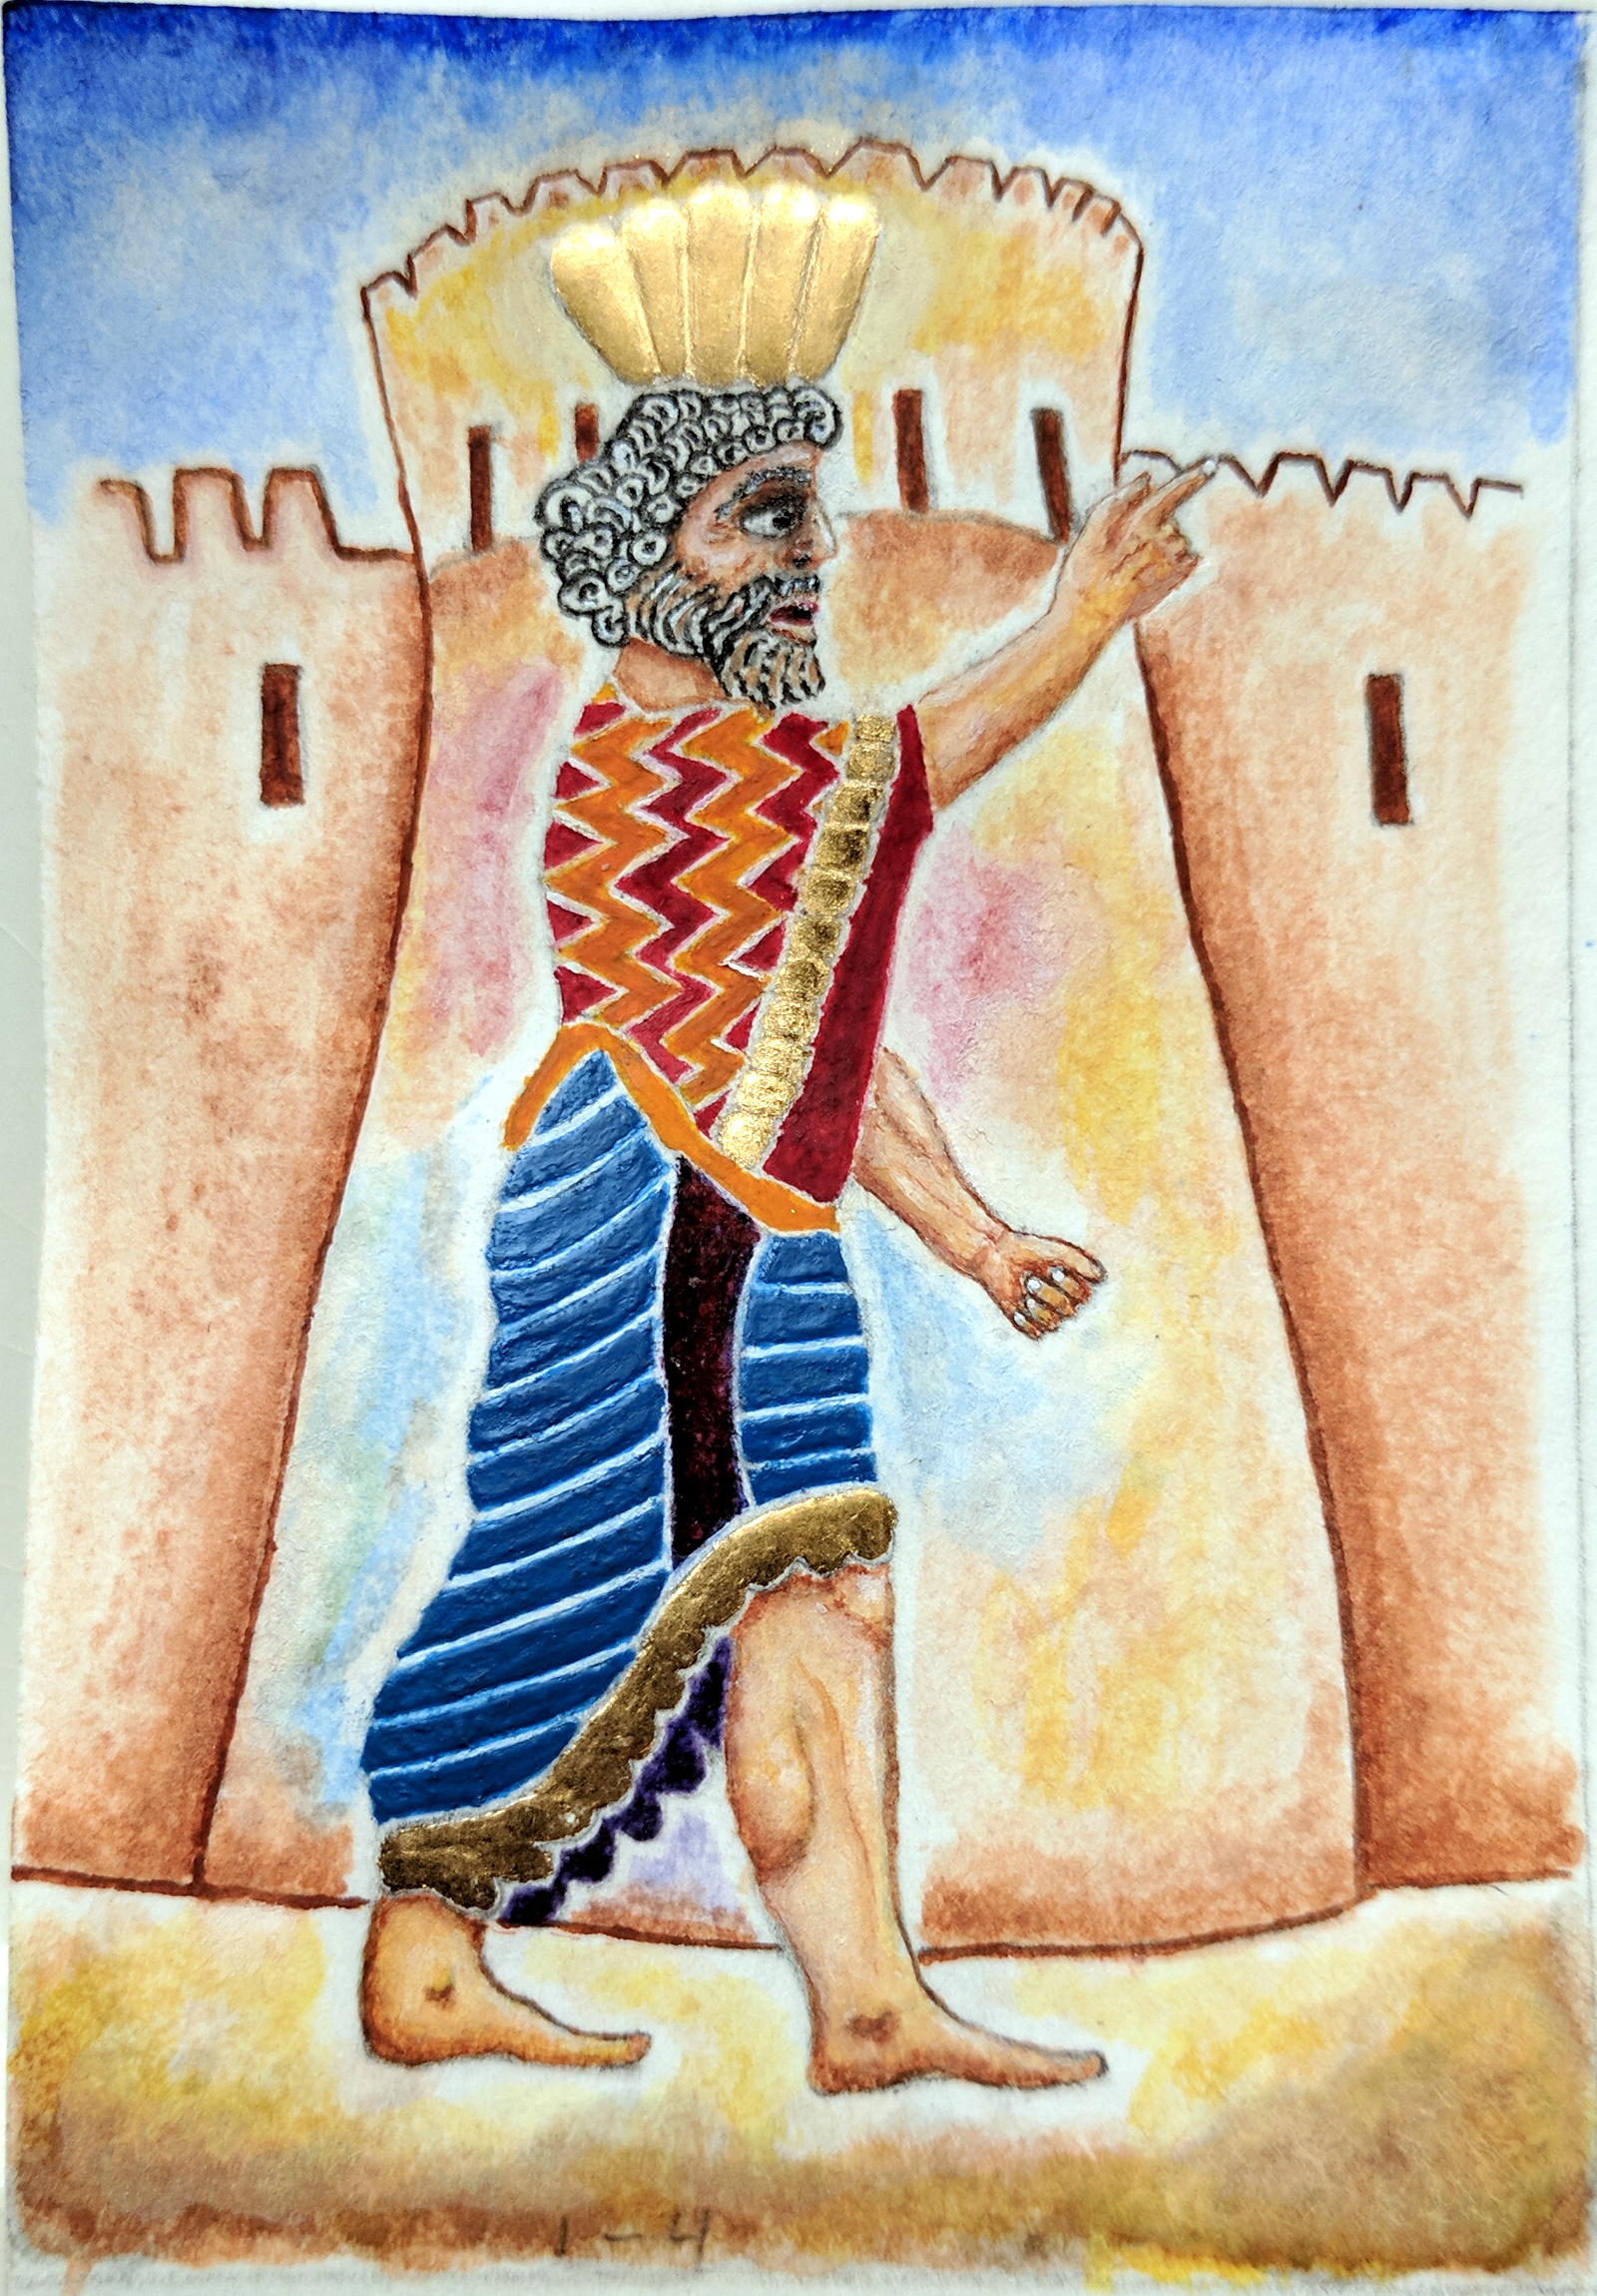 Achashverosh and his palace walls